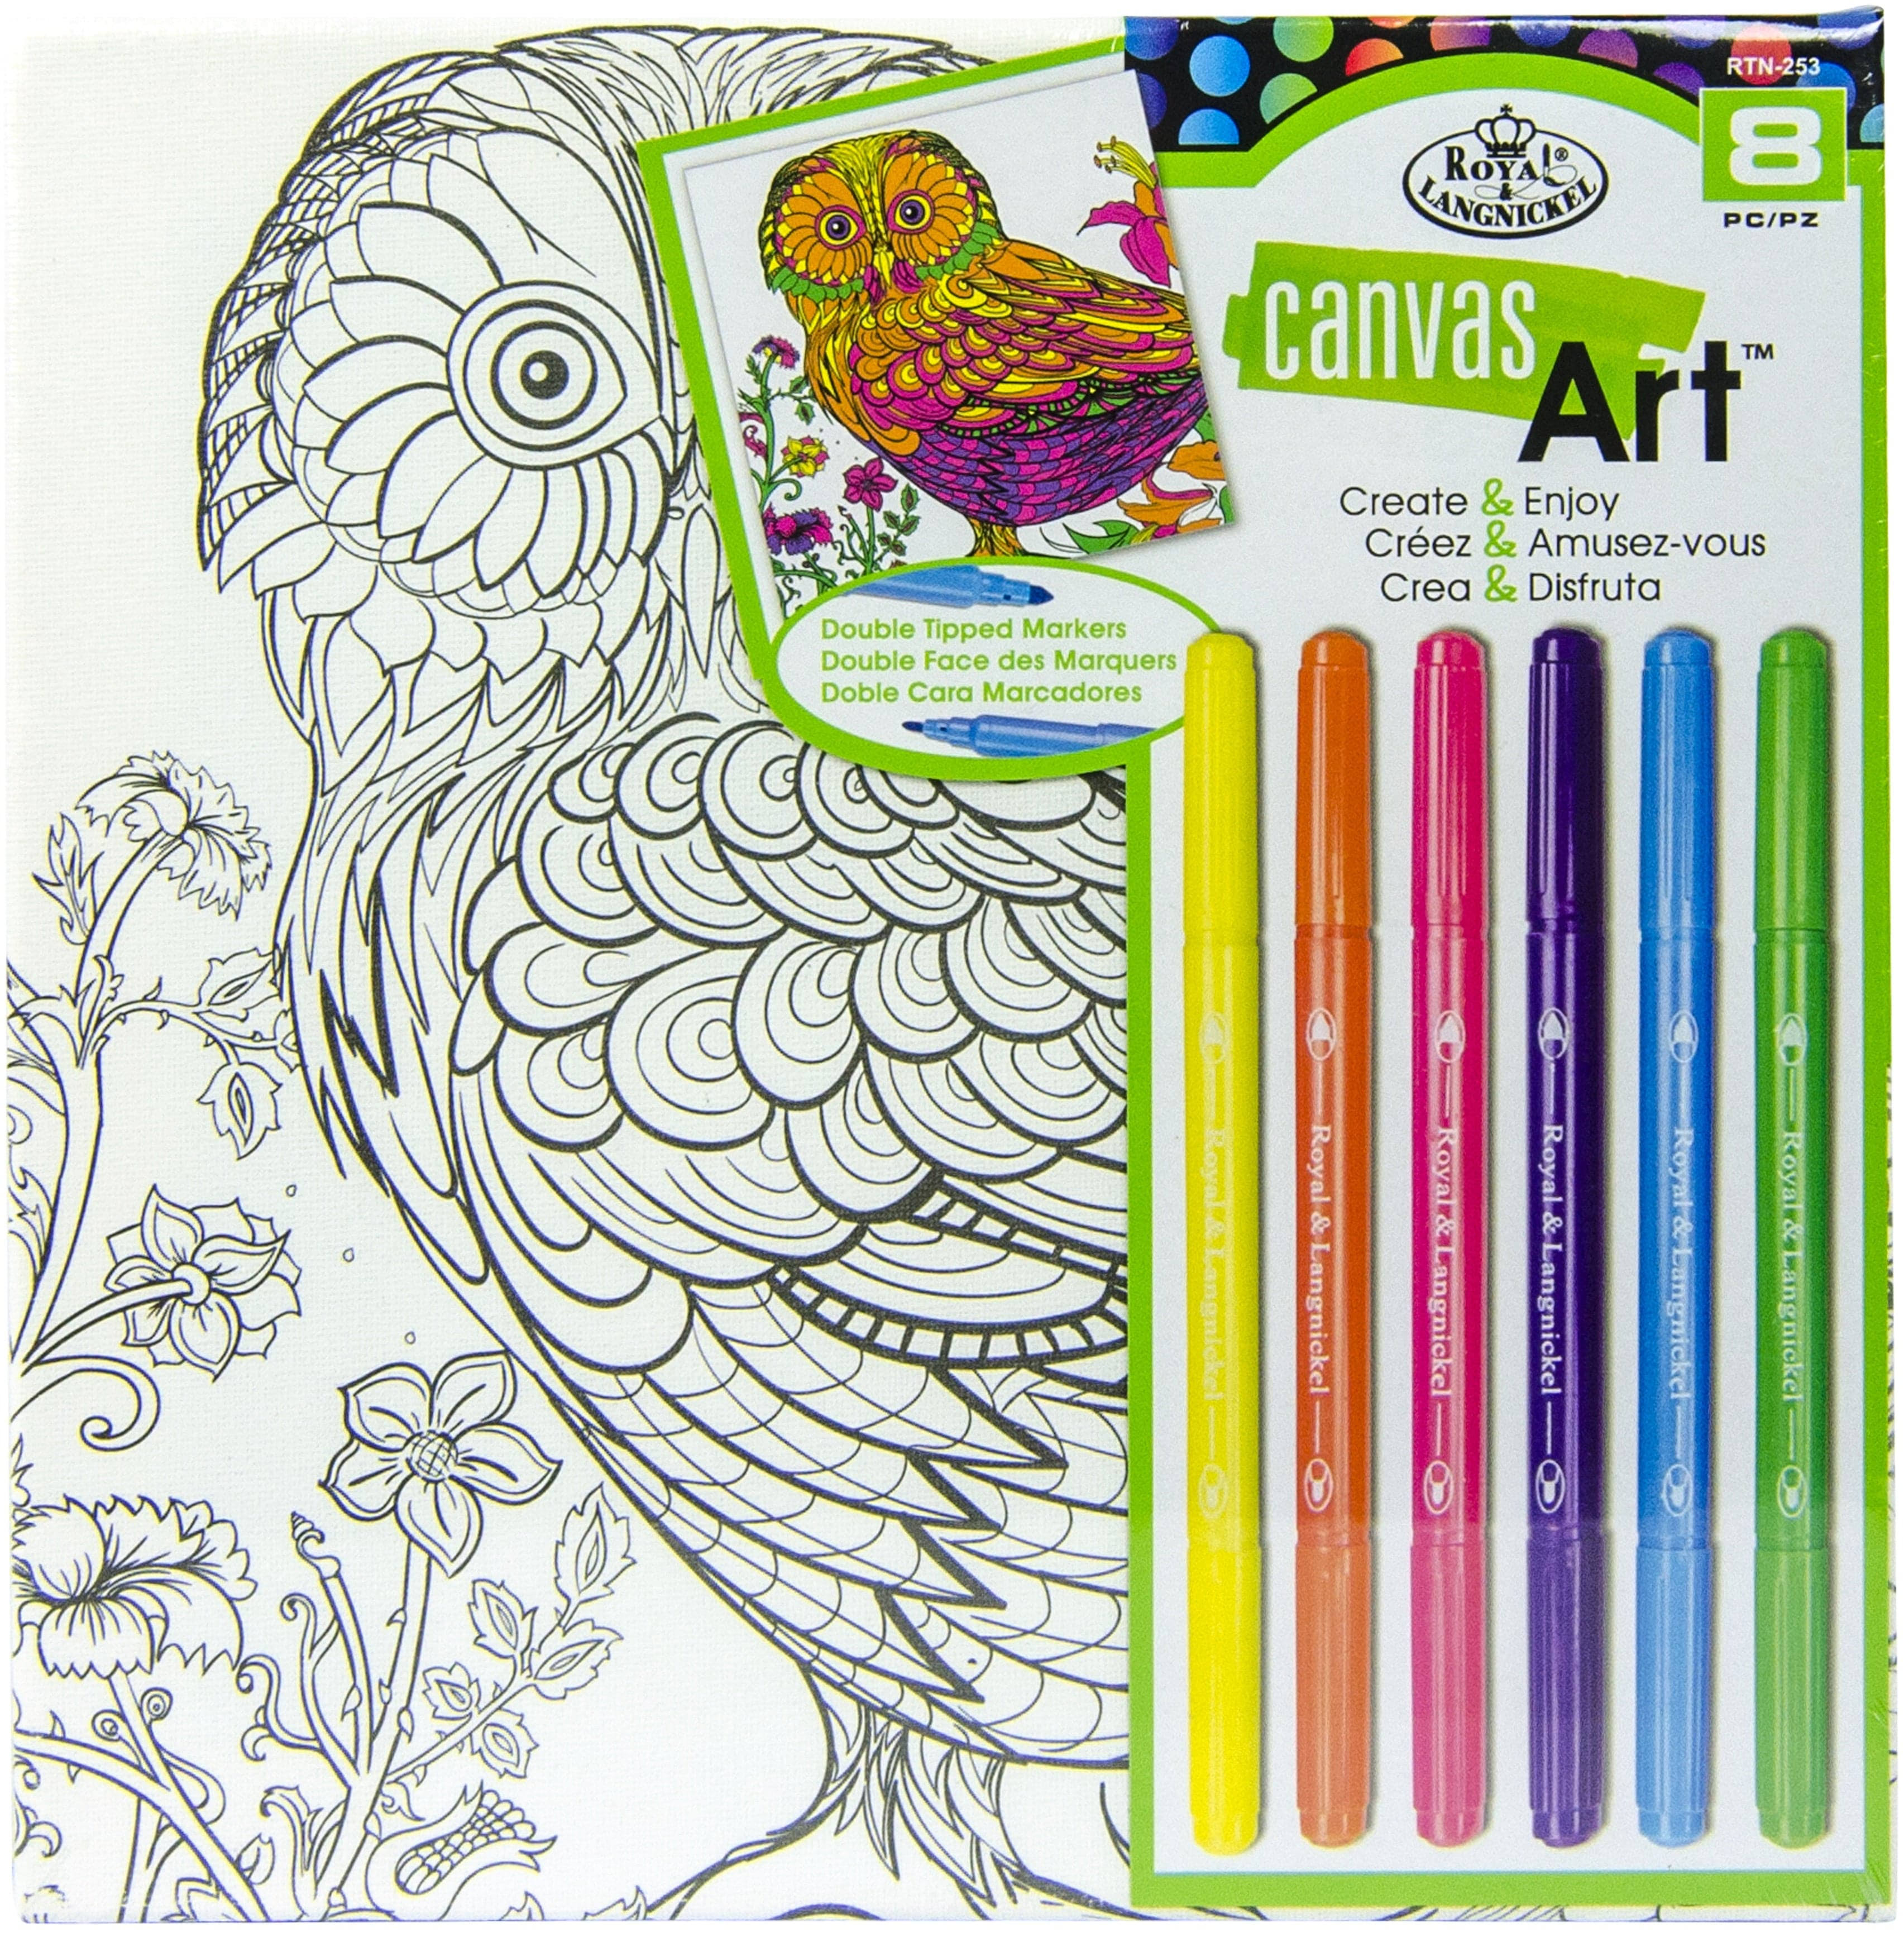 Royal Brush Canvas Art Markers Kit Owl